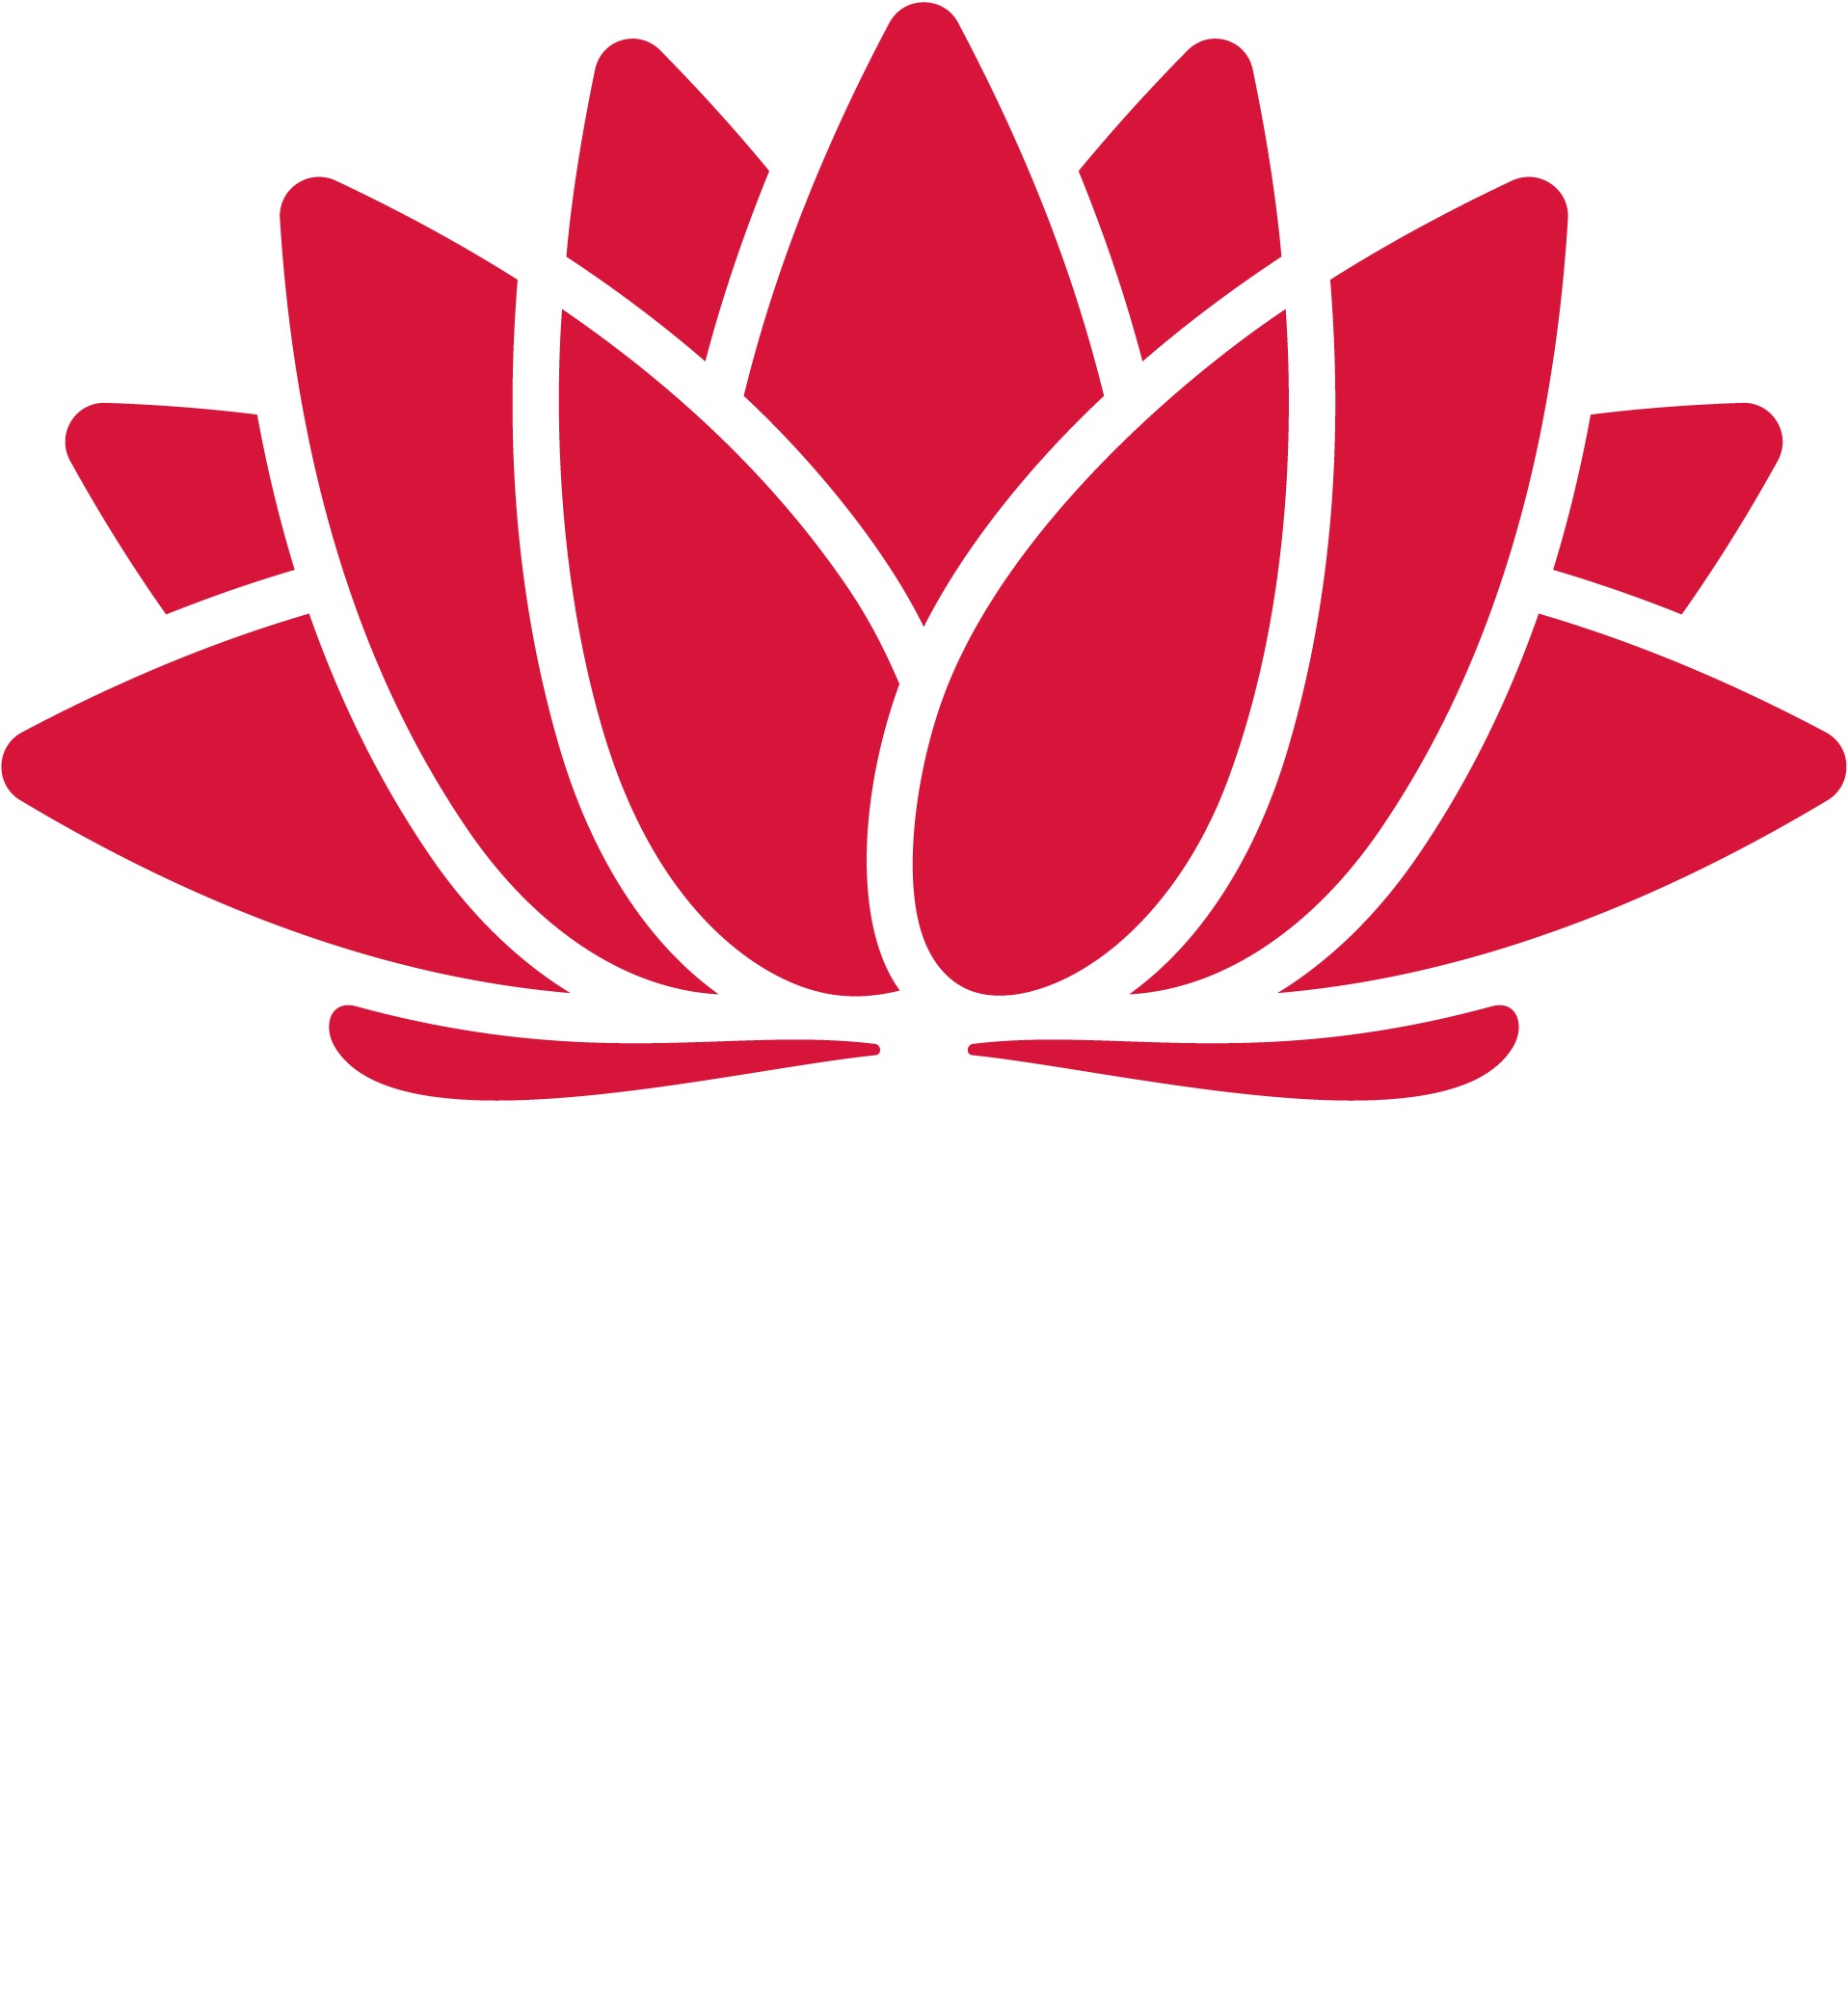 NSW Government Logo